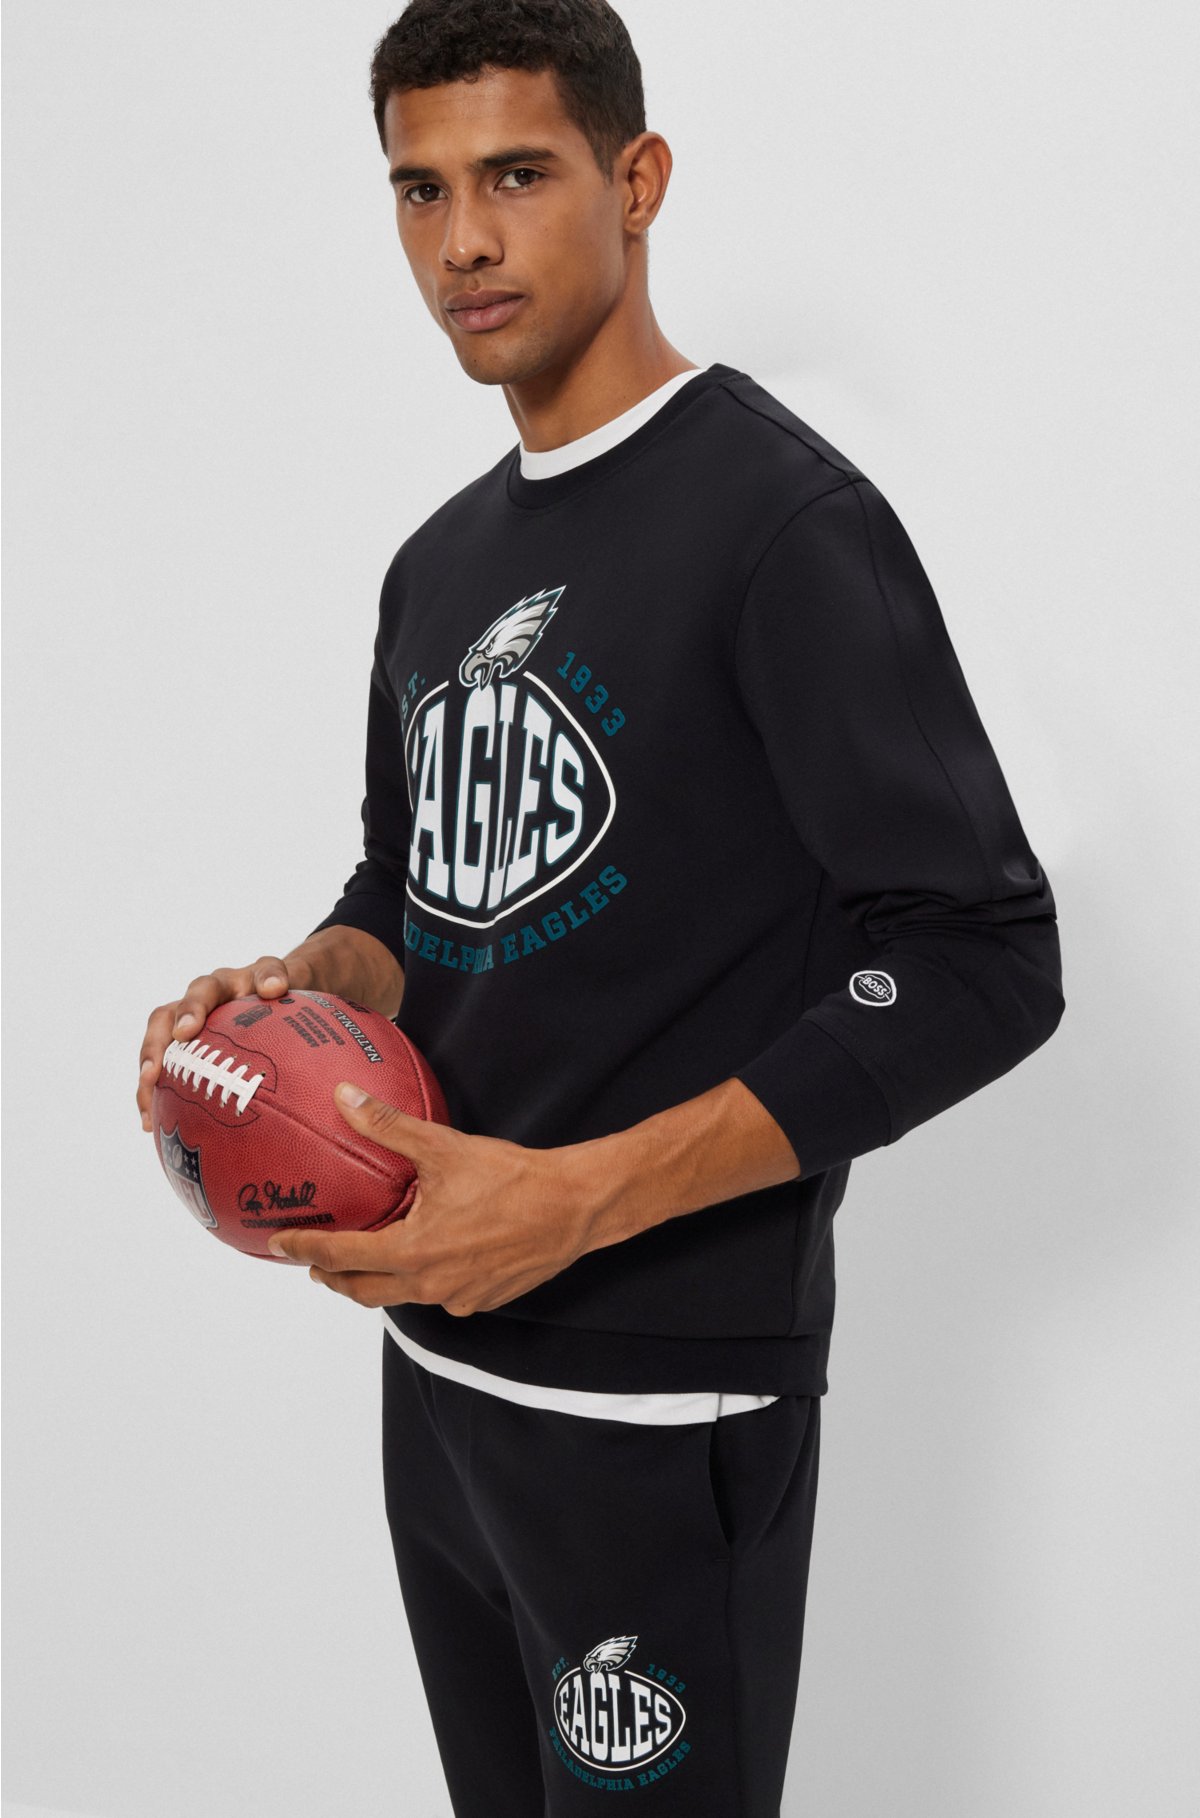 BOSS x NFL cotton-blend sweatshirt with collaborative branding, Eagles